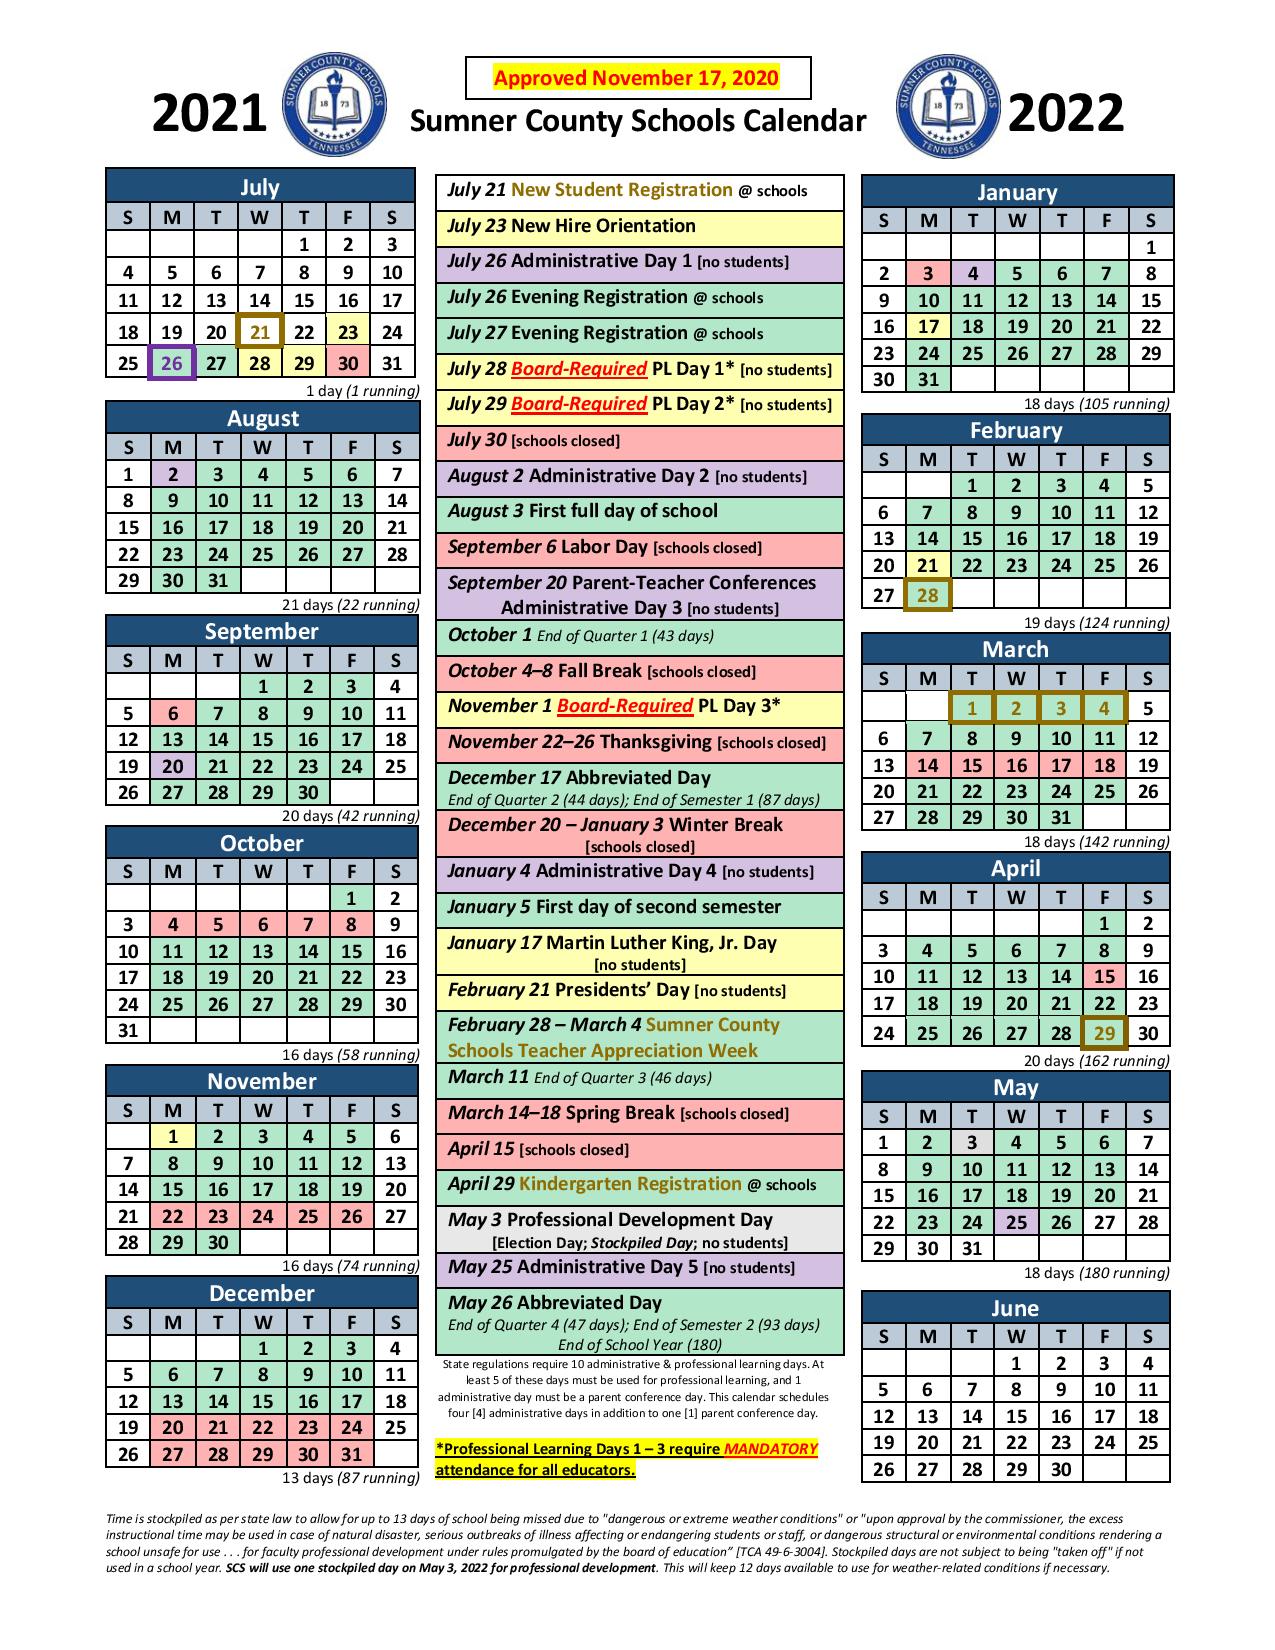 sumner-county-school-calendar-holidays-2021-2022